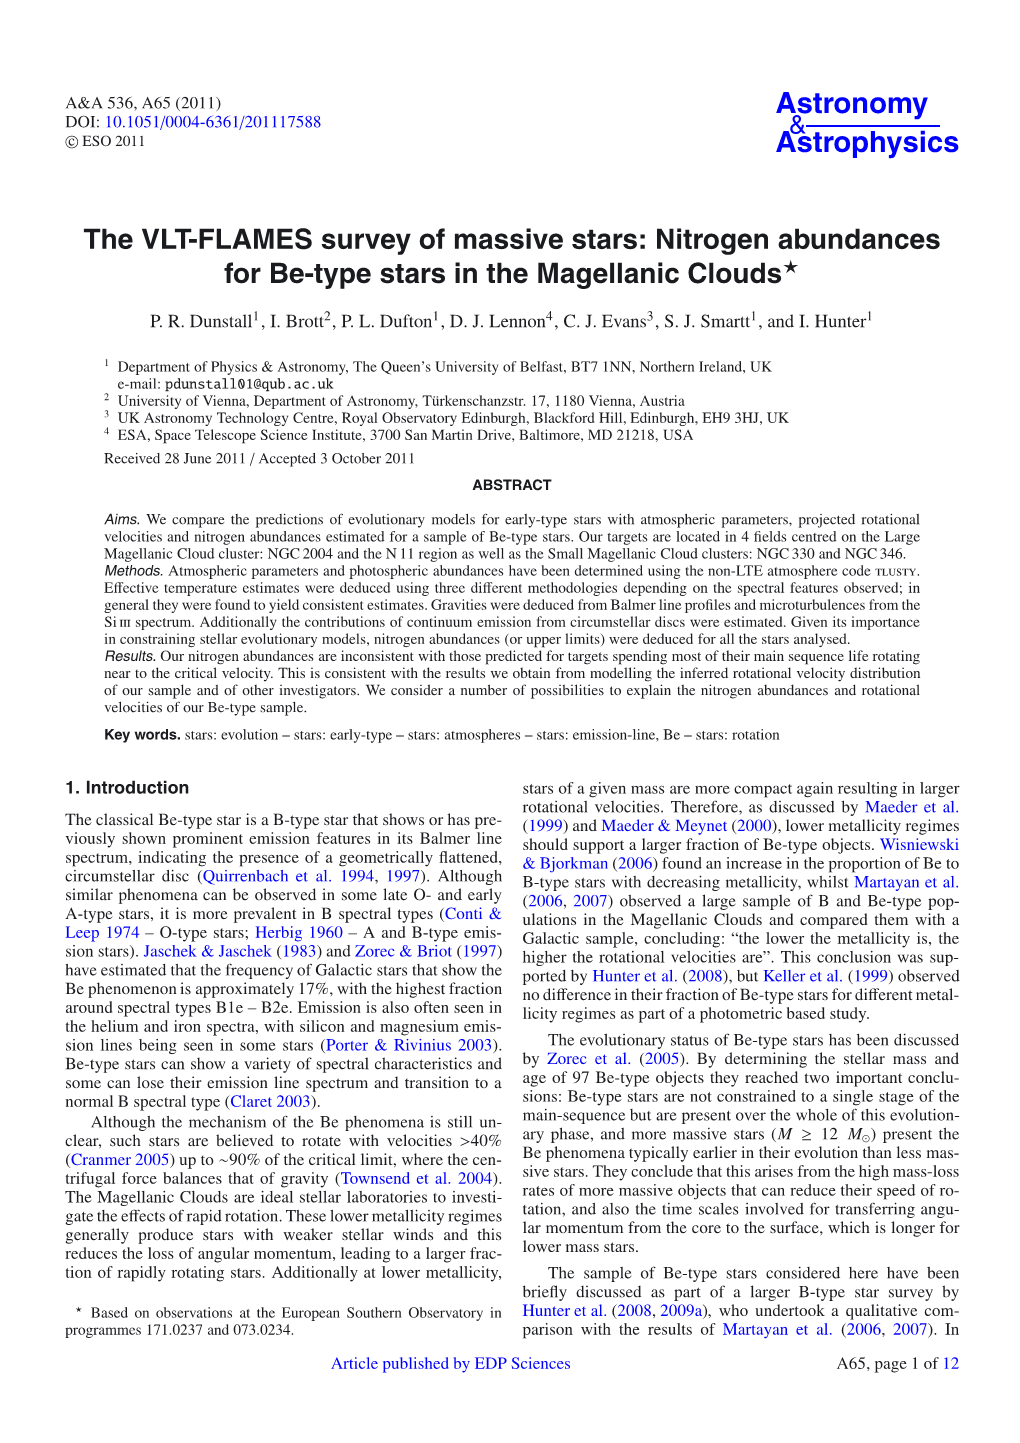 The VLT-FLAMES Survey of Massive Stars: Nitrogen Abundances for Be-Type Stars in the Magellanic Clouds